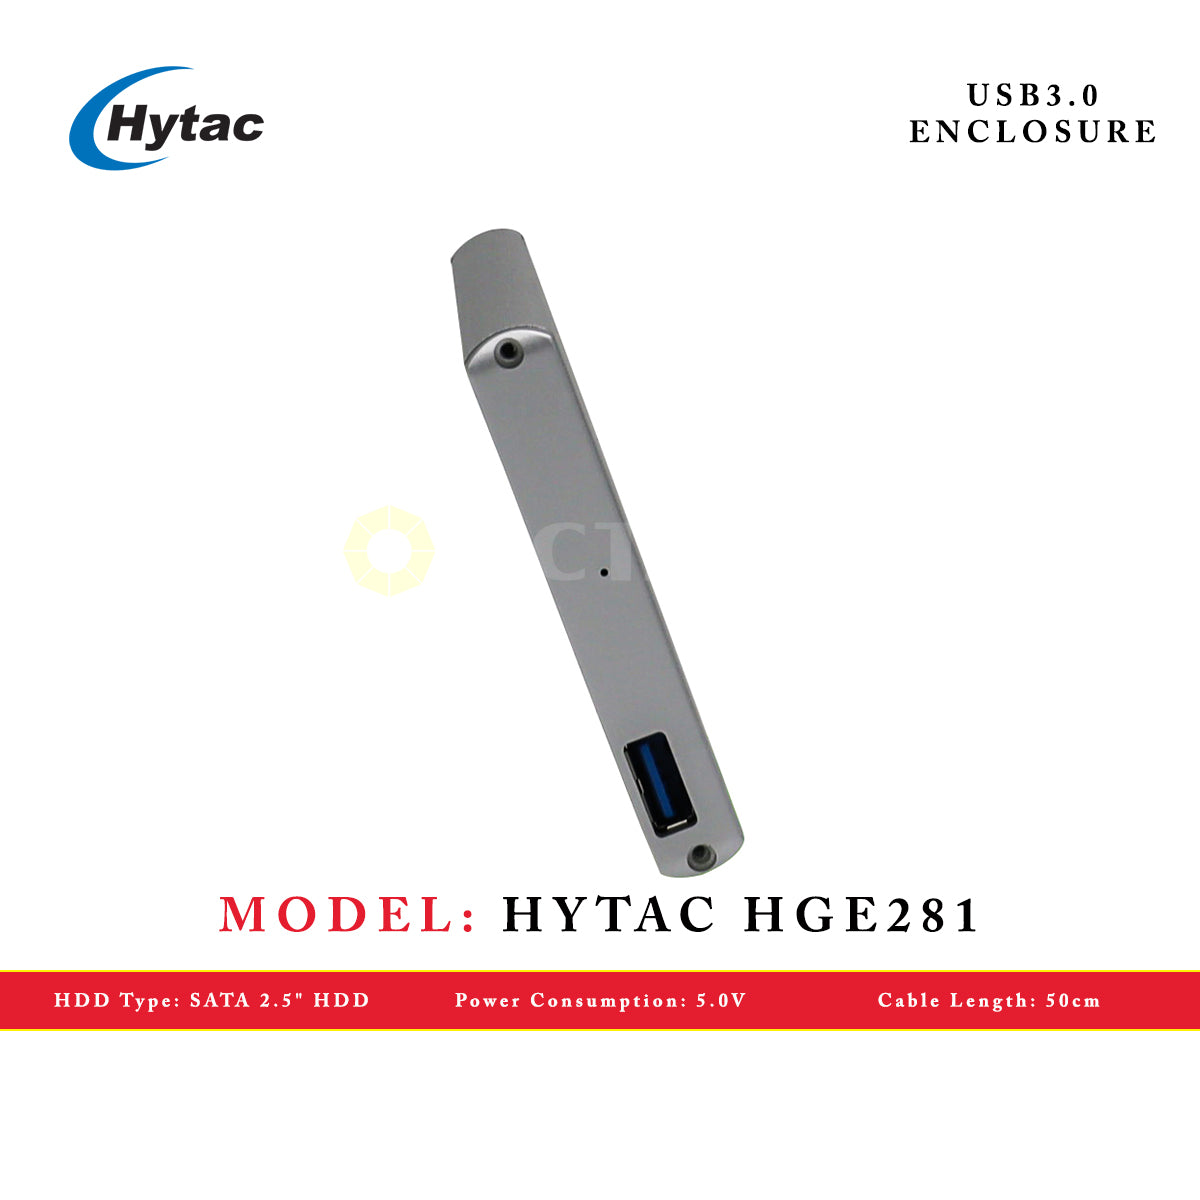 HYTAC HGE281 SILVER USB3.0 ENCLOSURE